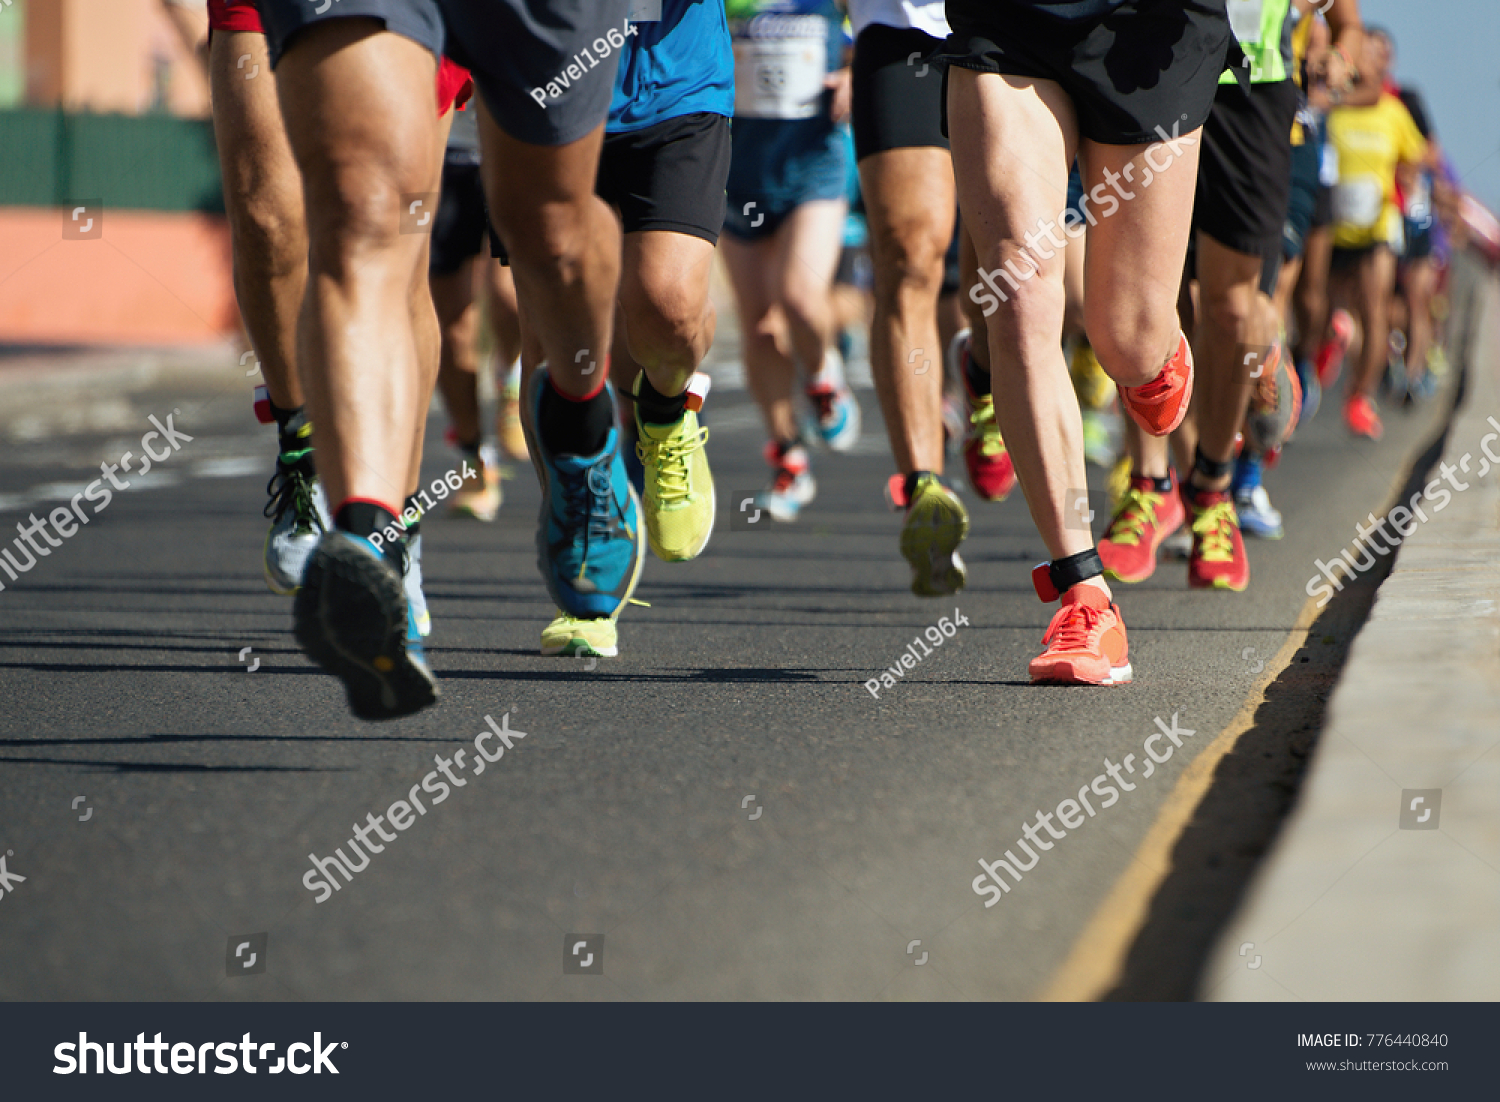 Marathon running in the light of evening,running on city road detail on legs #776440840